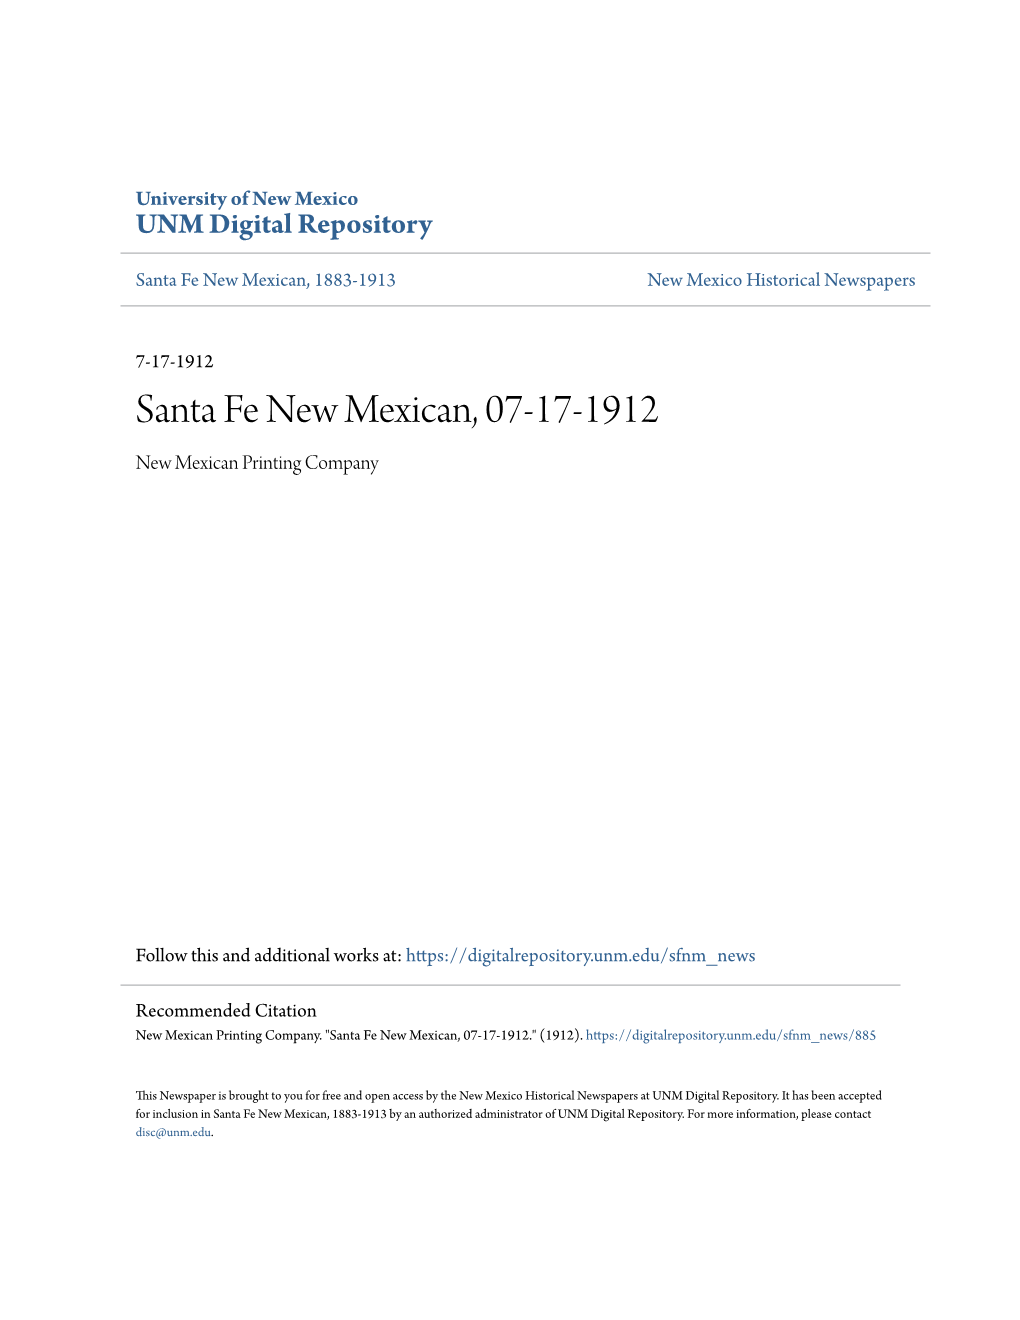 Santa Fe New Mexican, 07-17-1912 New Mexican Printing Company